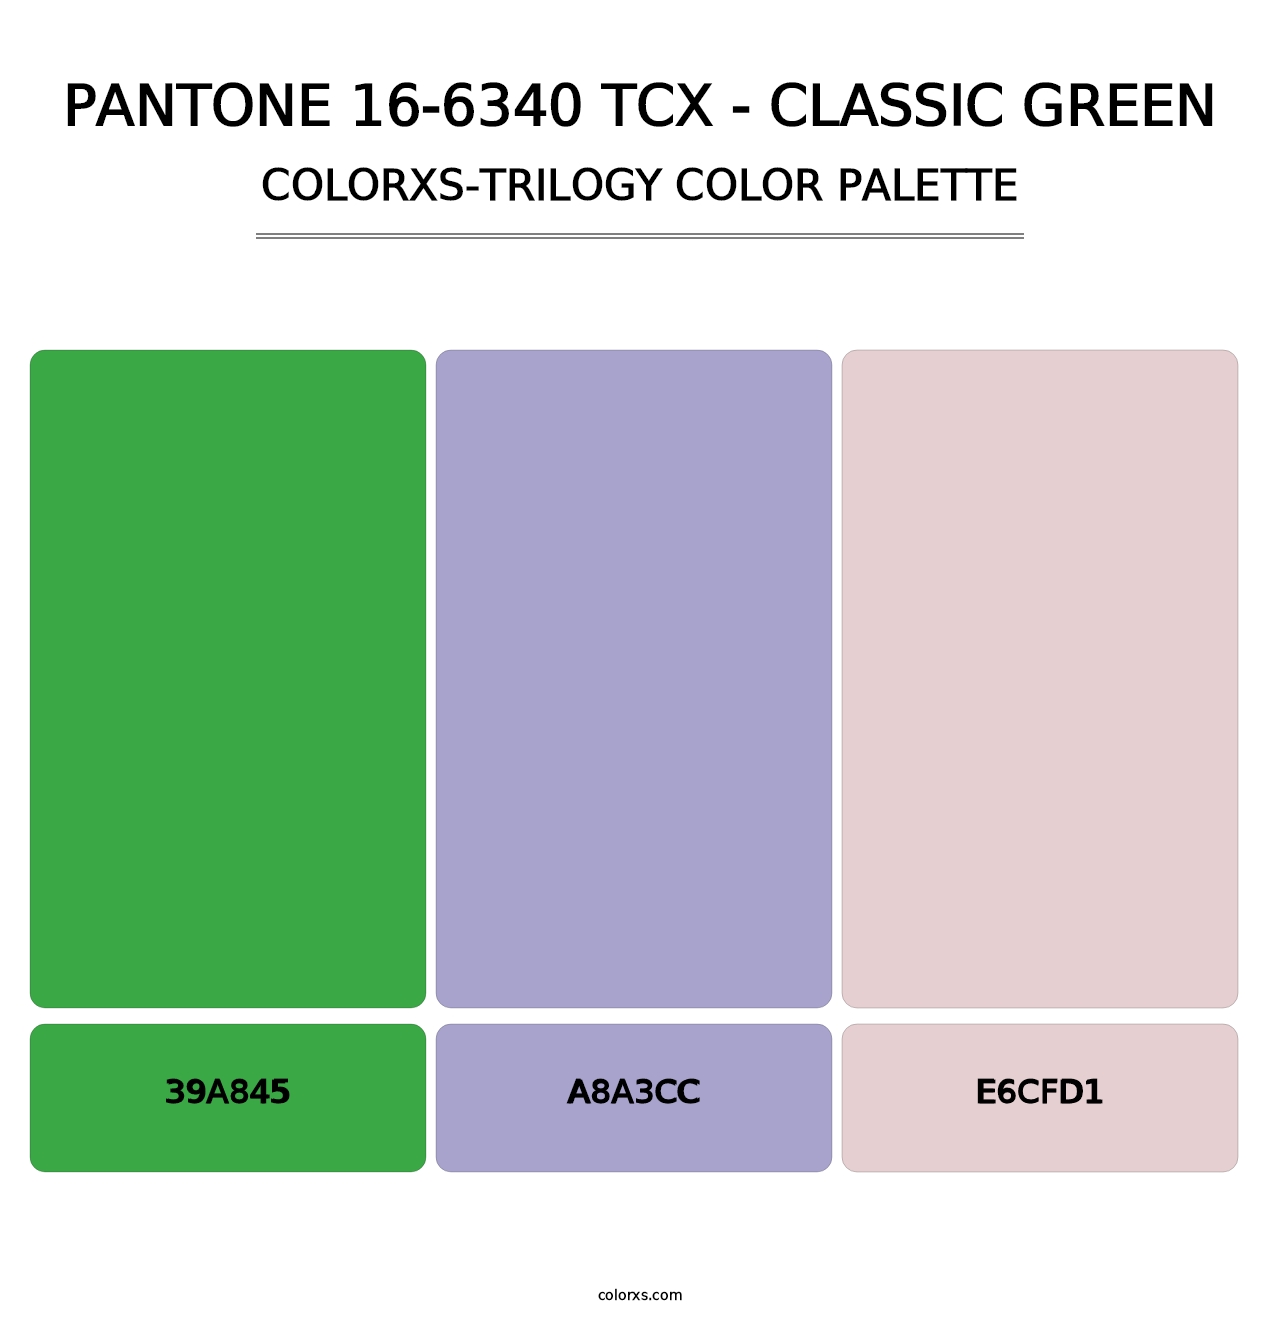 PANTONE 16-6340 TCX - Classic Green - Colorxs Trilogy Palette